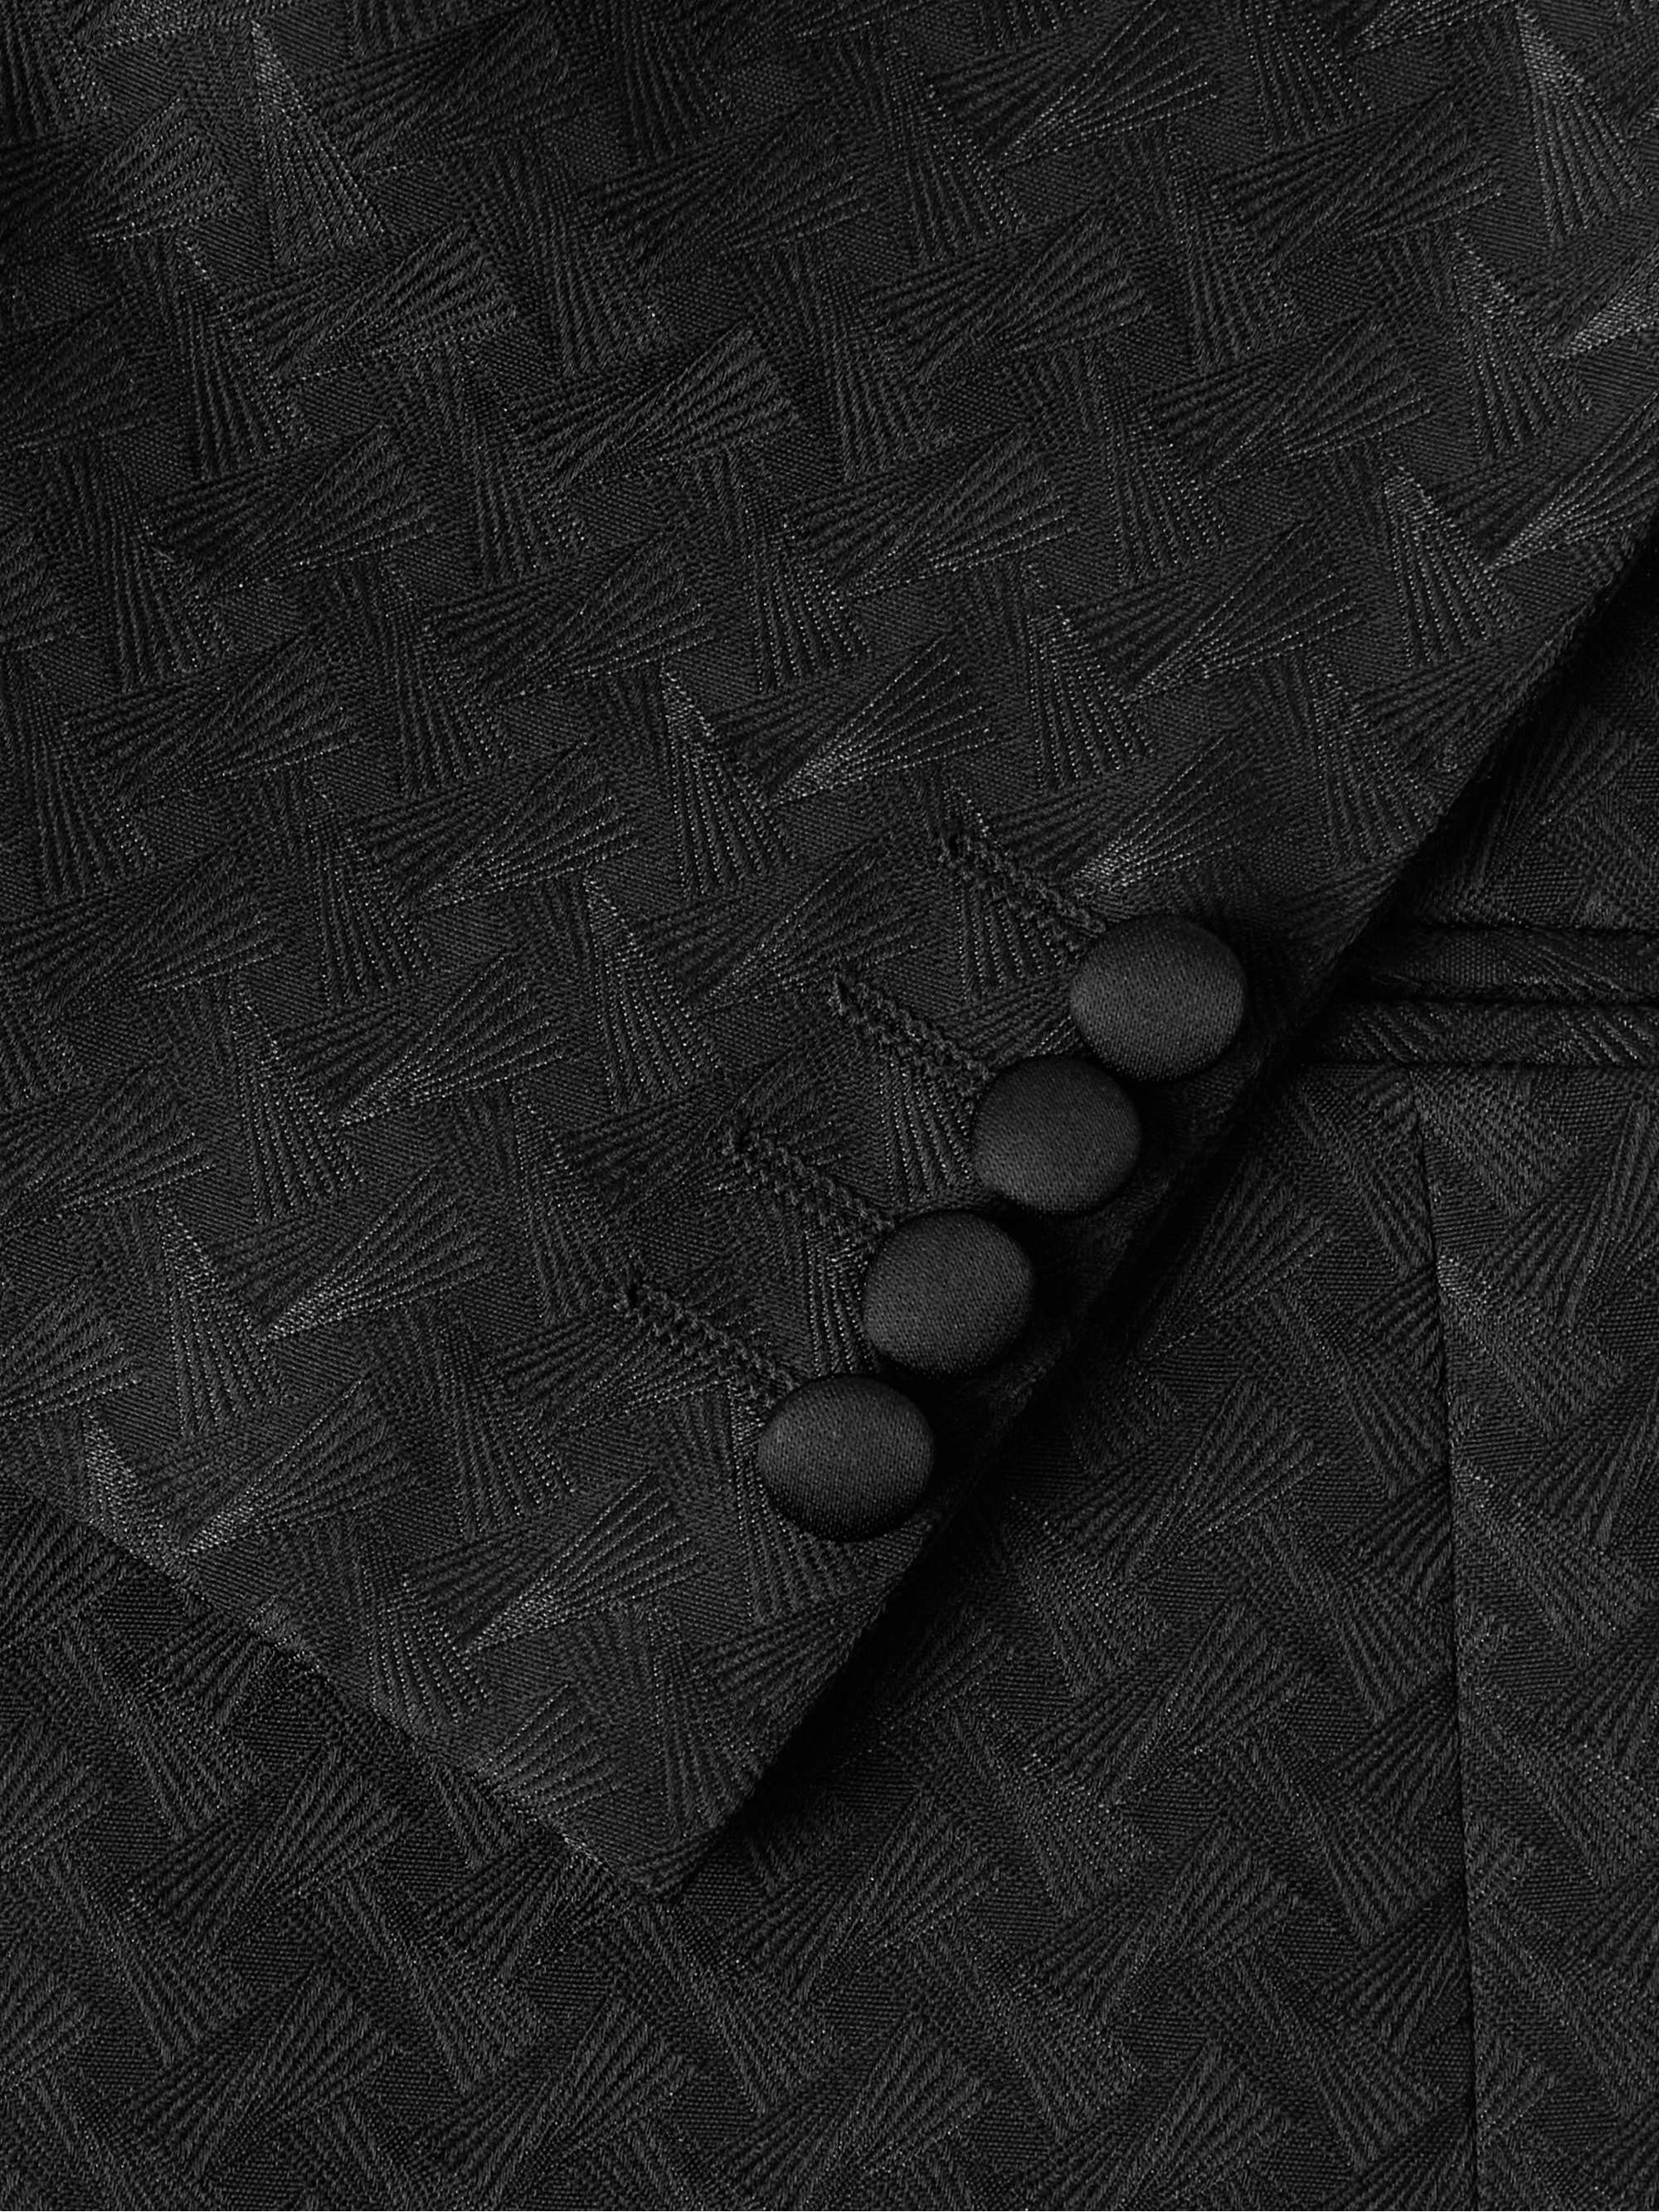 CANALI Slim-Fit Shawl-Collar Satin-Jacquard Tuxedo Jacket